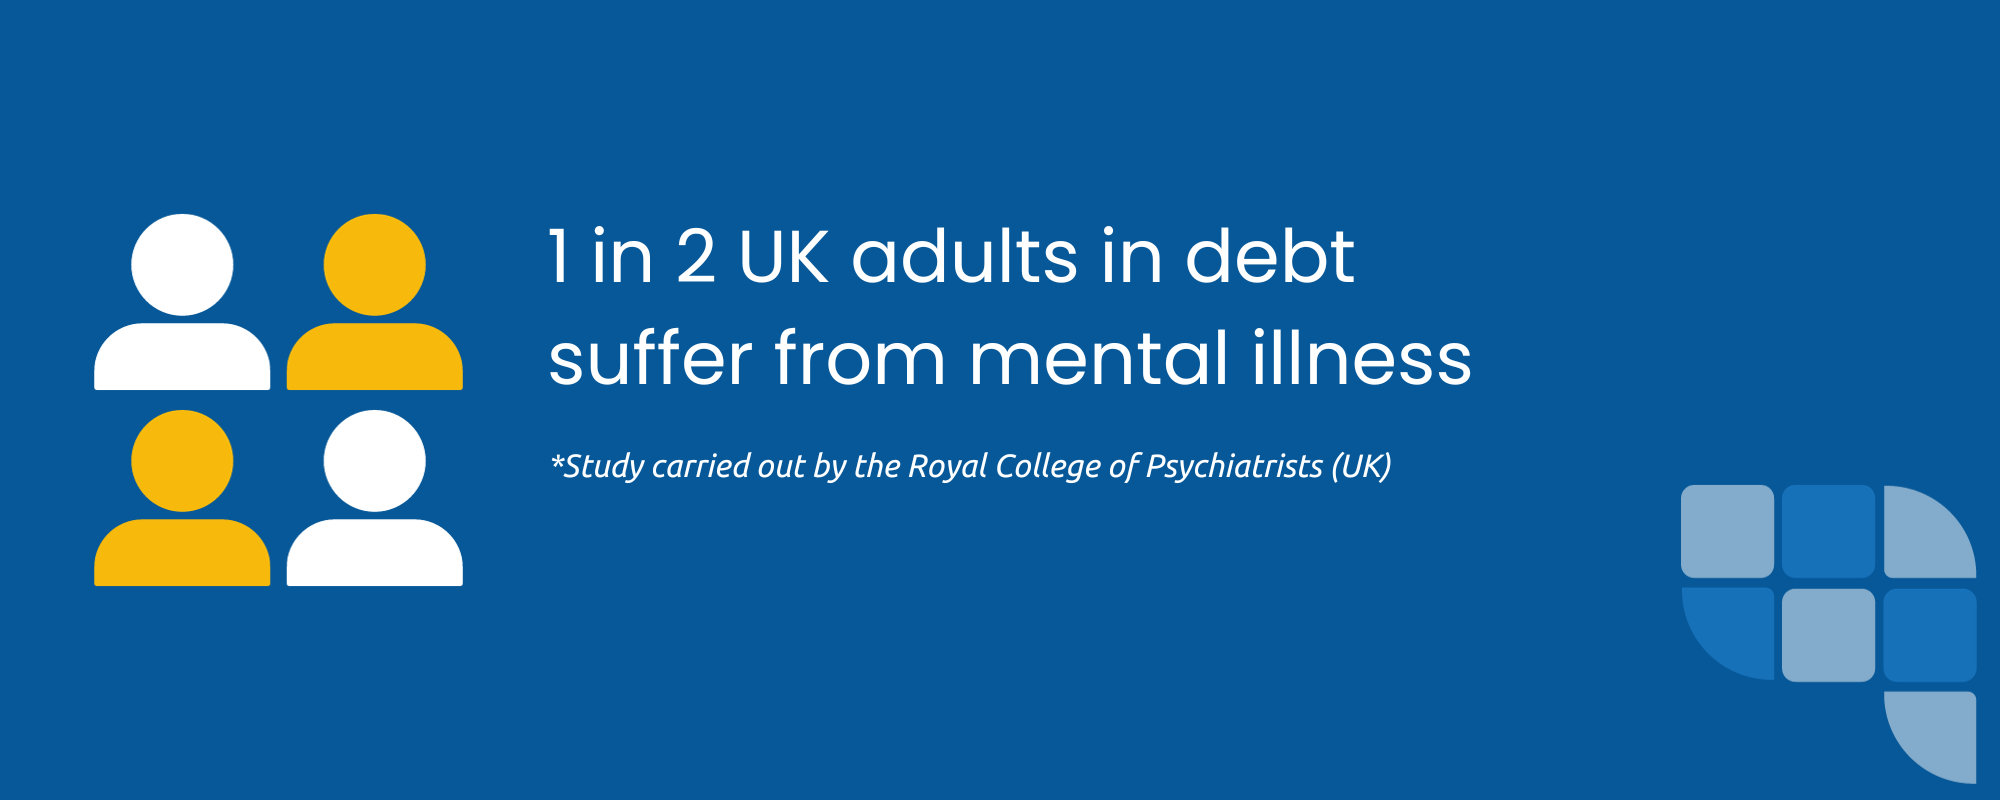 debt mental illness statistic